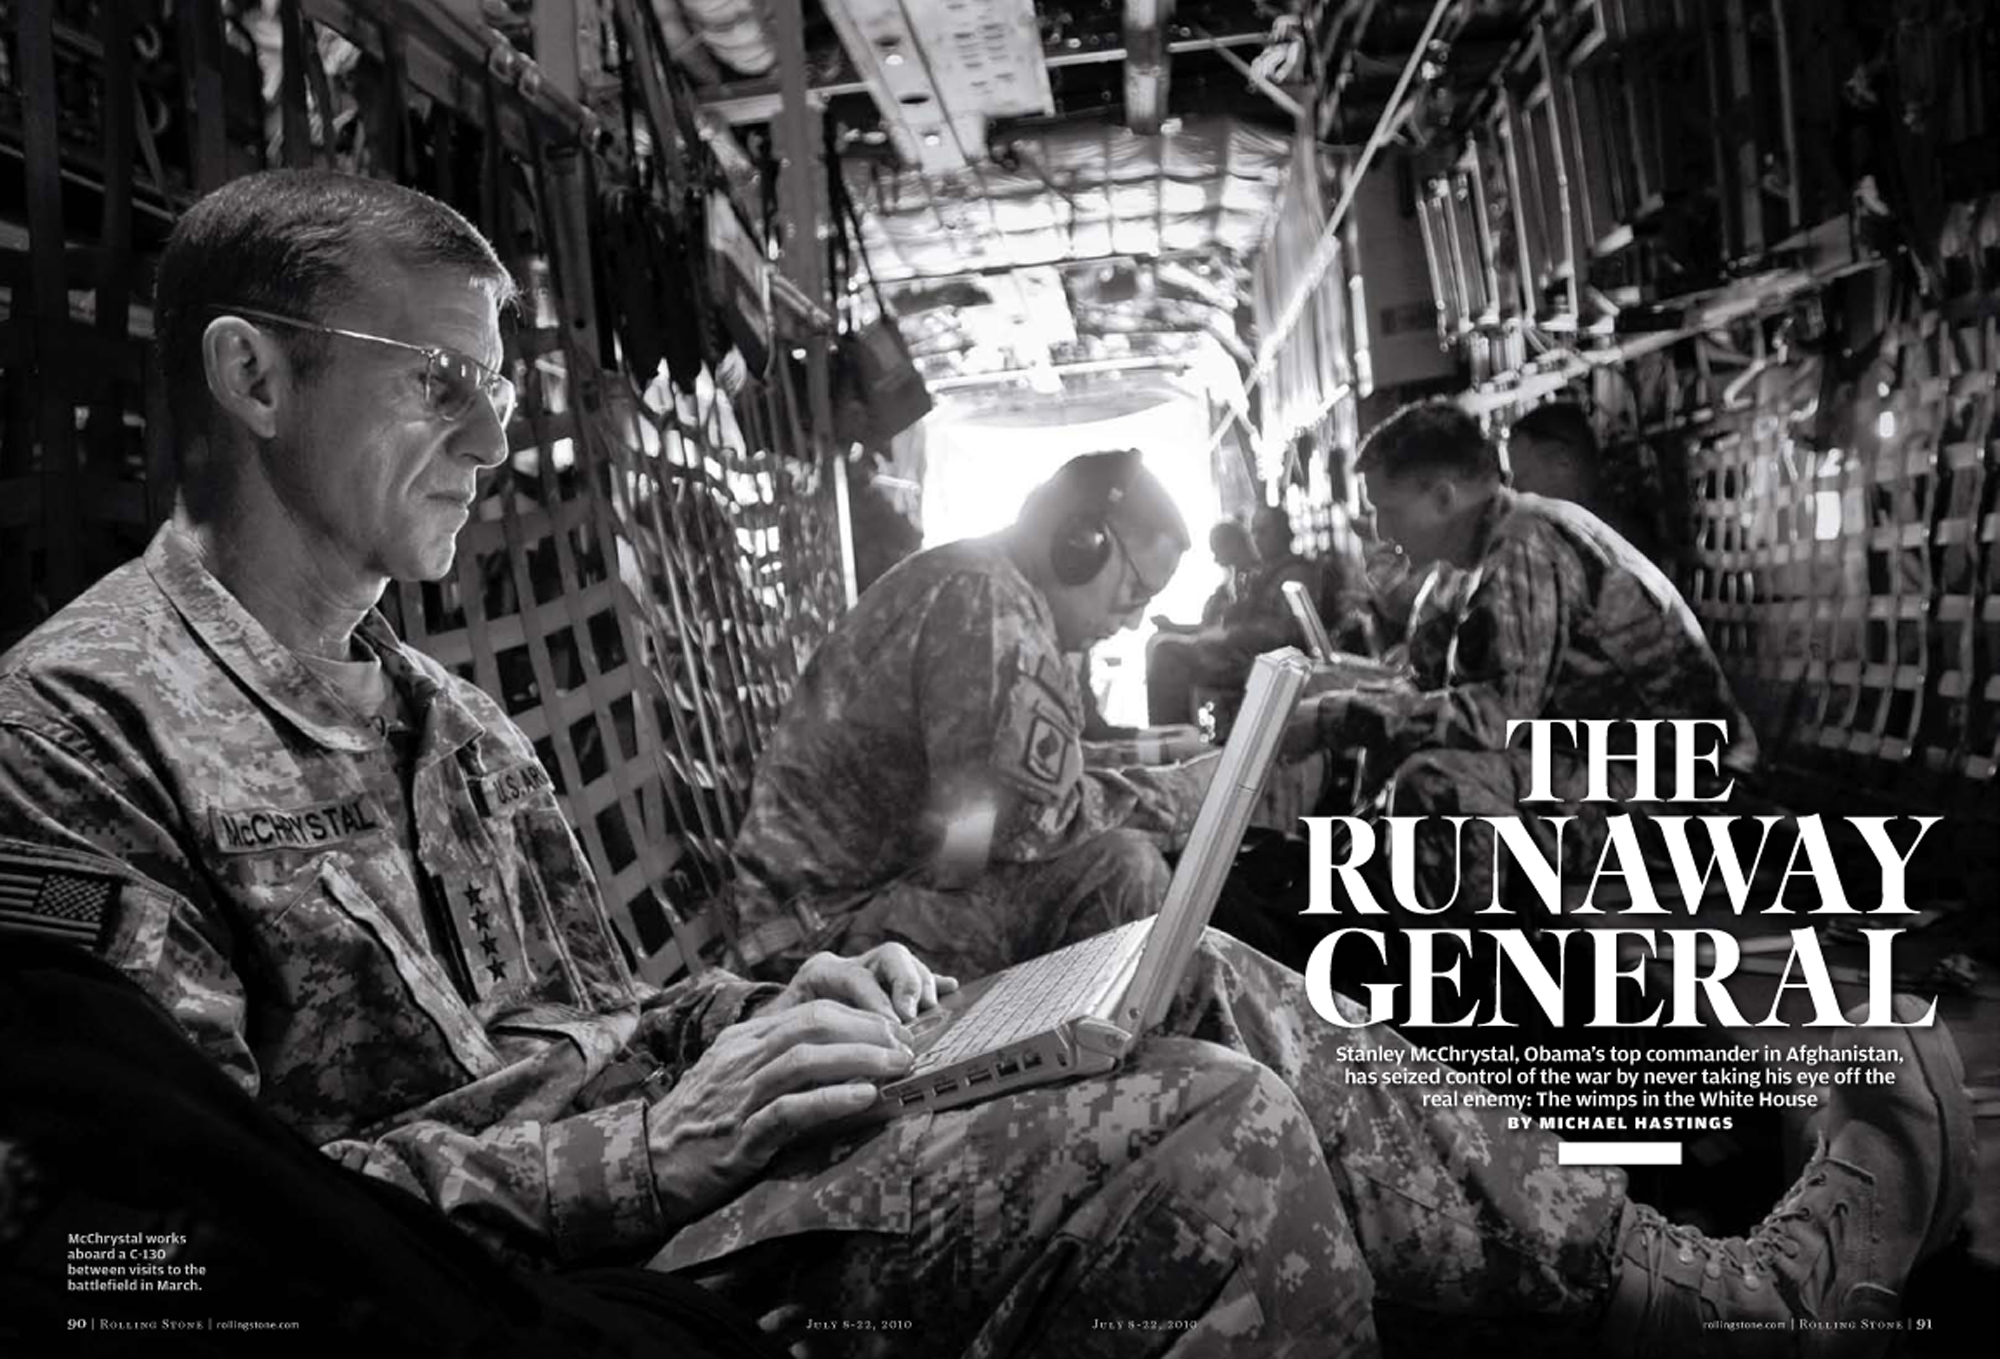 Afghanistan, Rolling Stone, Stanley McChrystal, Barack Obama